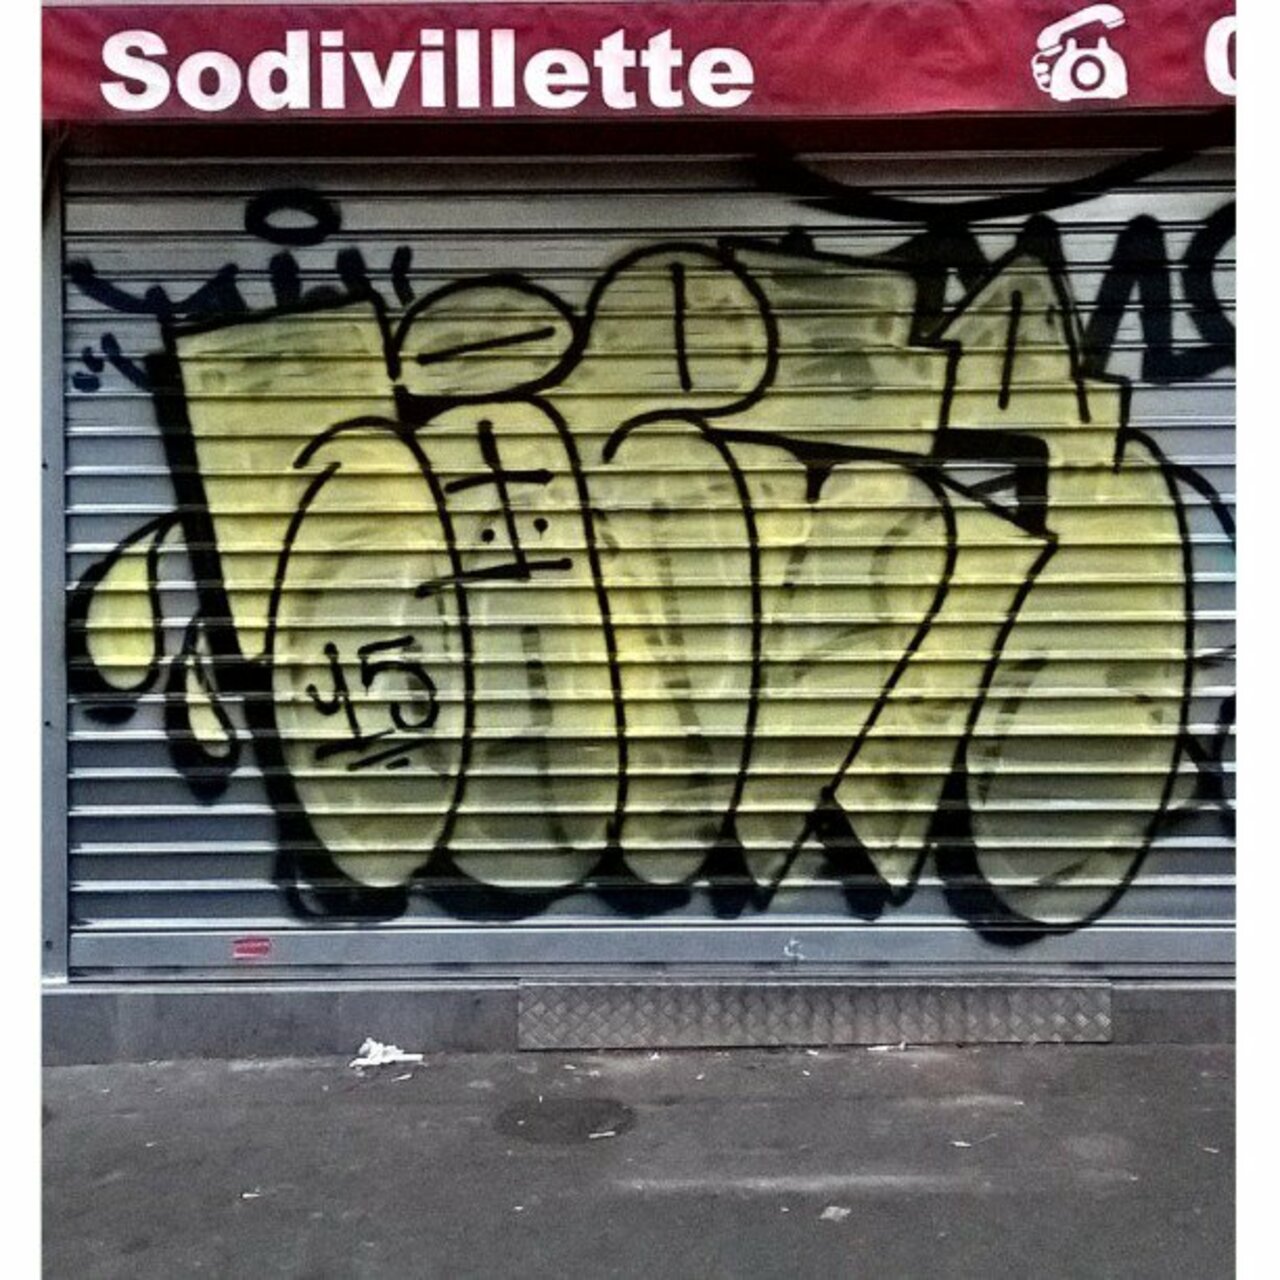 circumjacent_fr: #Paris #graffiti photo by maxdimontemarciano http://ift.tt/1GjoZXB #StreetArt https://t.co/36y9D9shi7